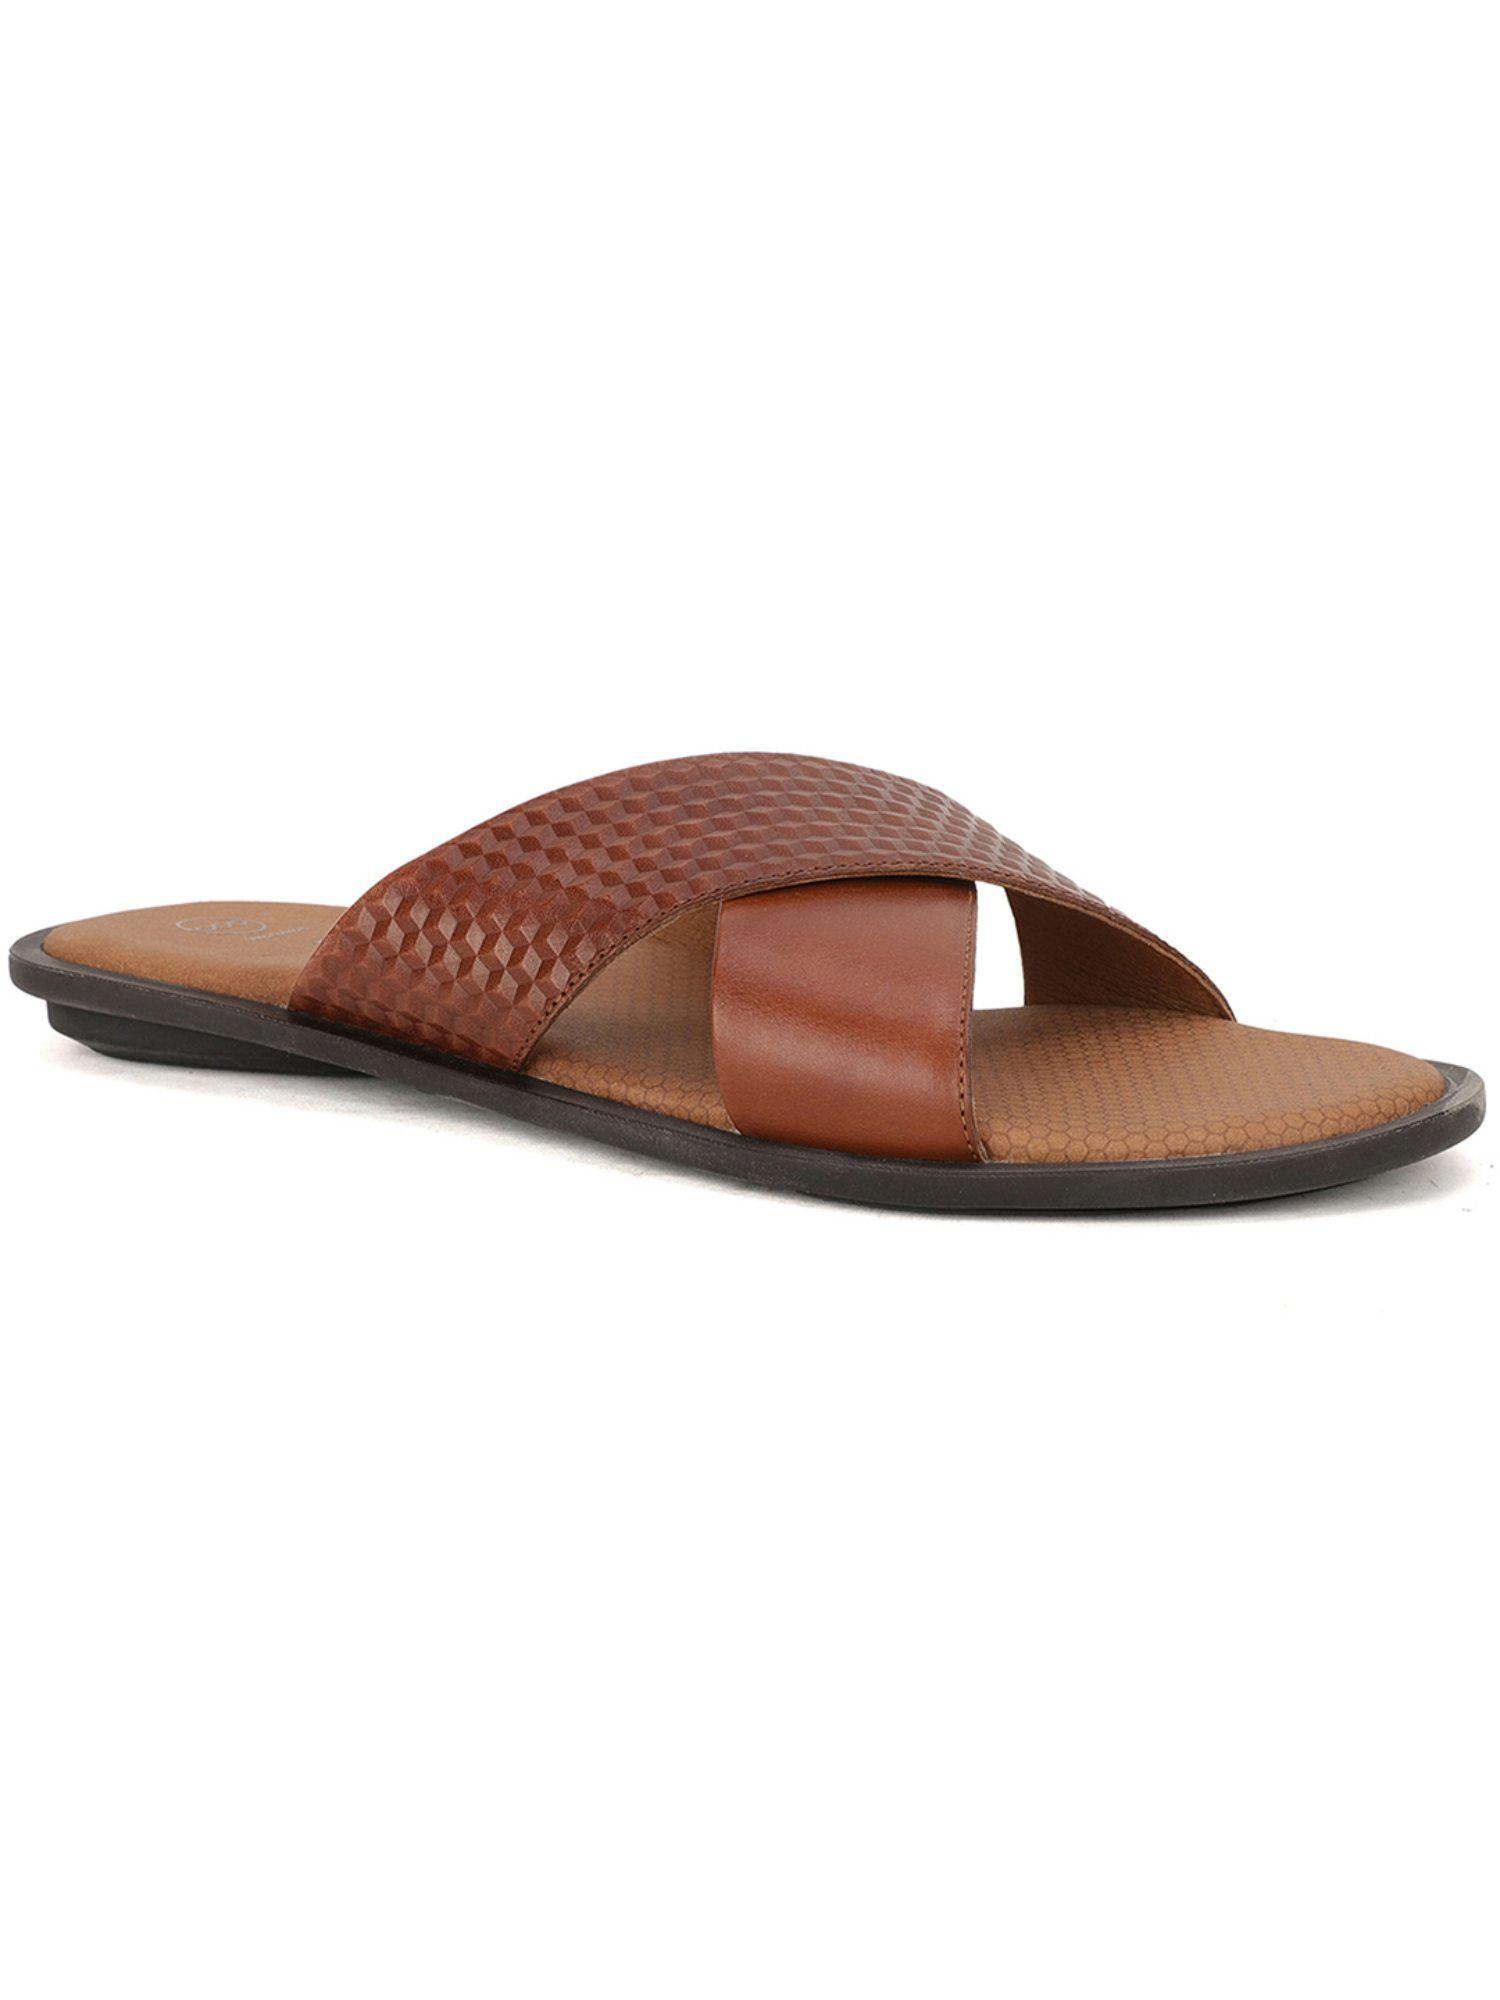 textured brown sandals